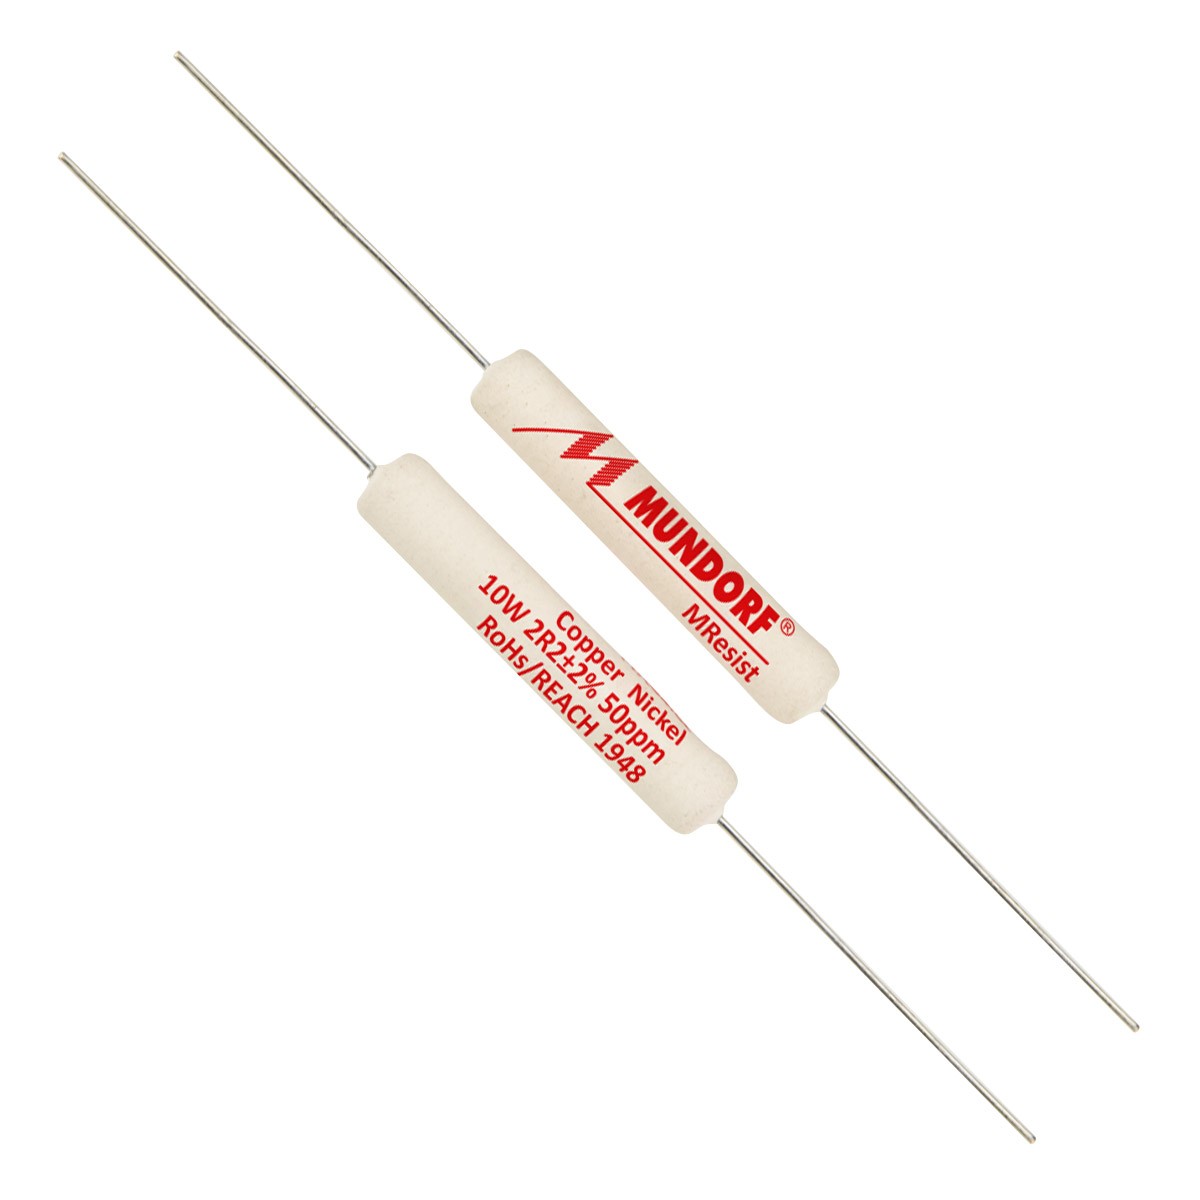 MUNDORF MRESIST CLASSIC Resistor 10W 1.5 Ohm